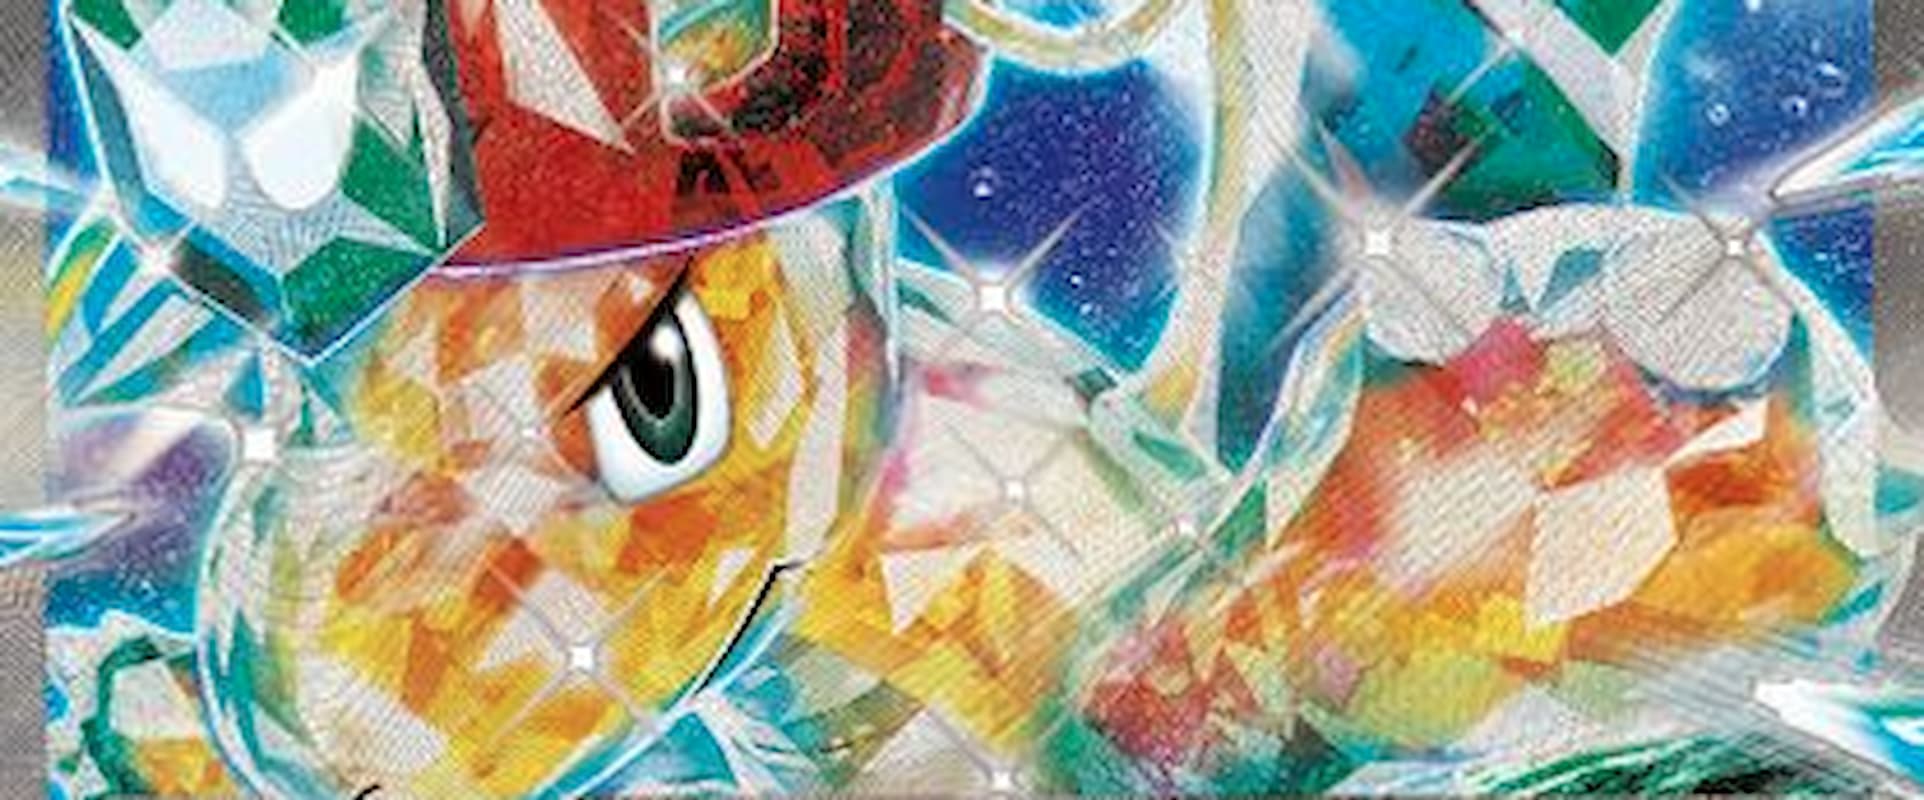 Pokémon TCG Japan Reveals Ex Starter Deck: Miraidon Ex